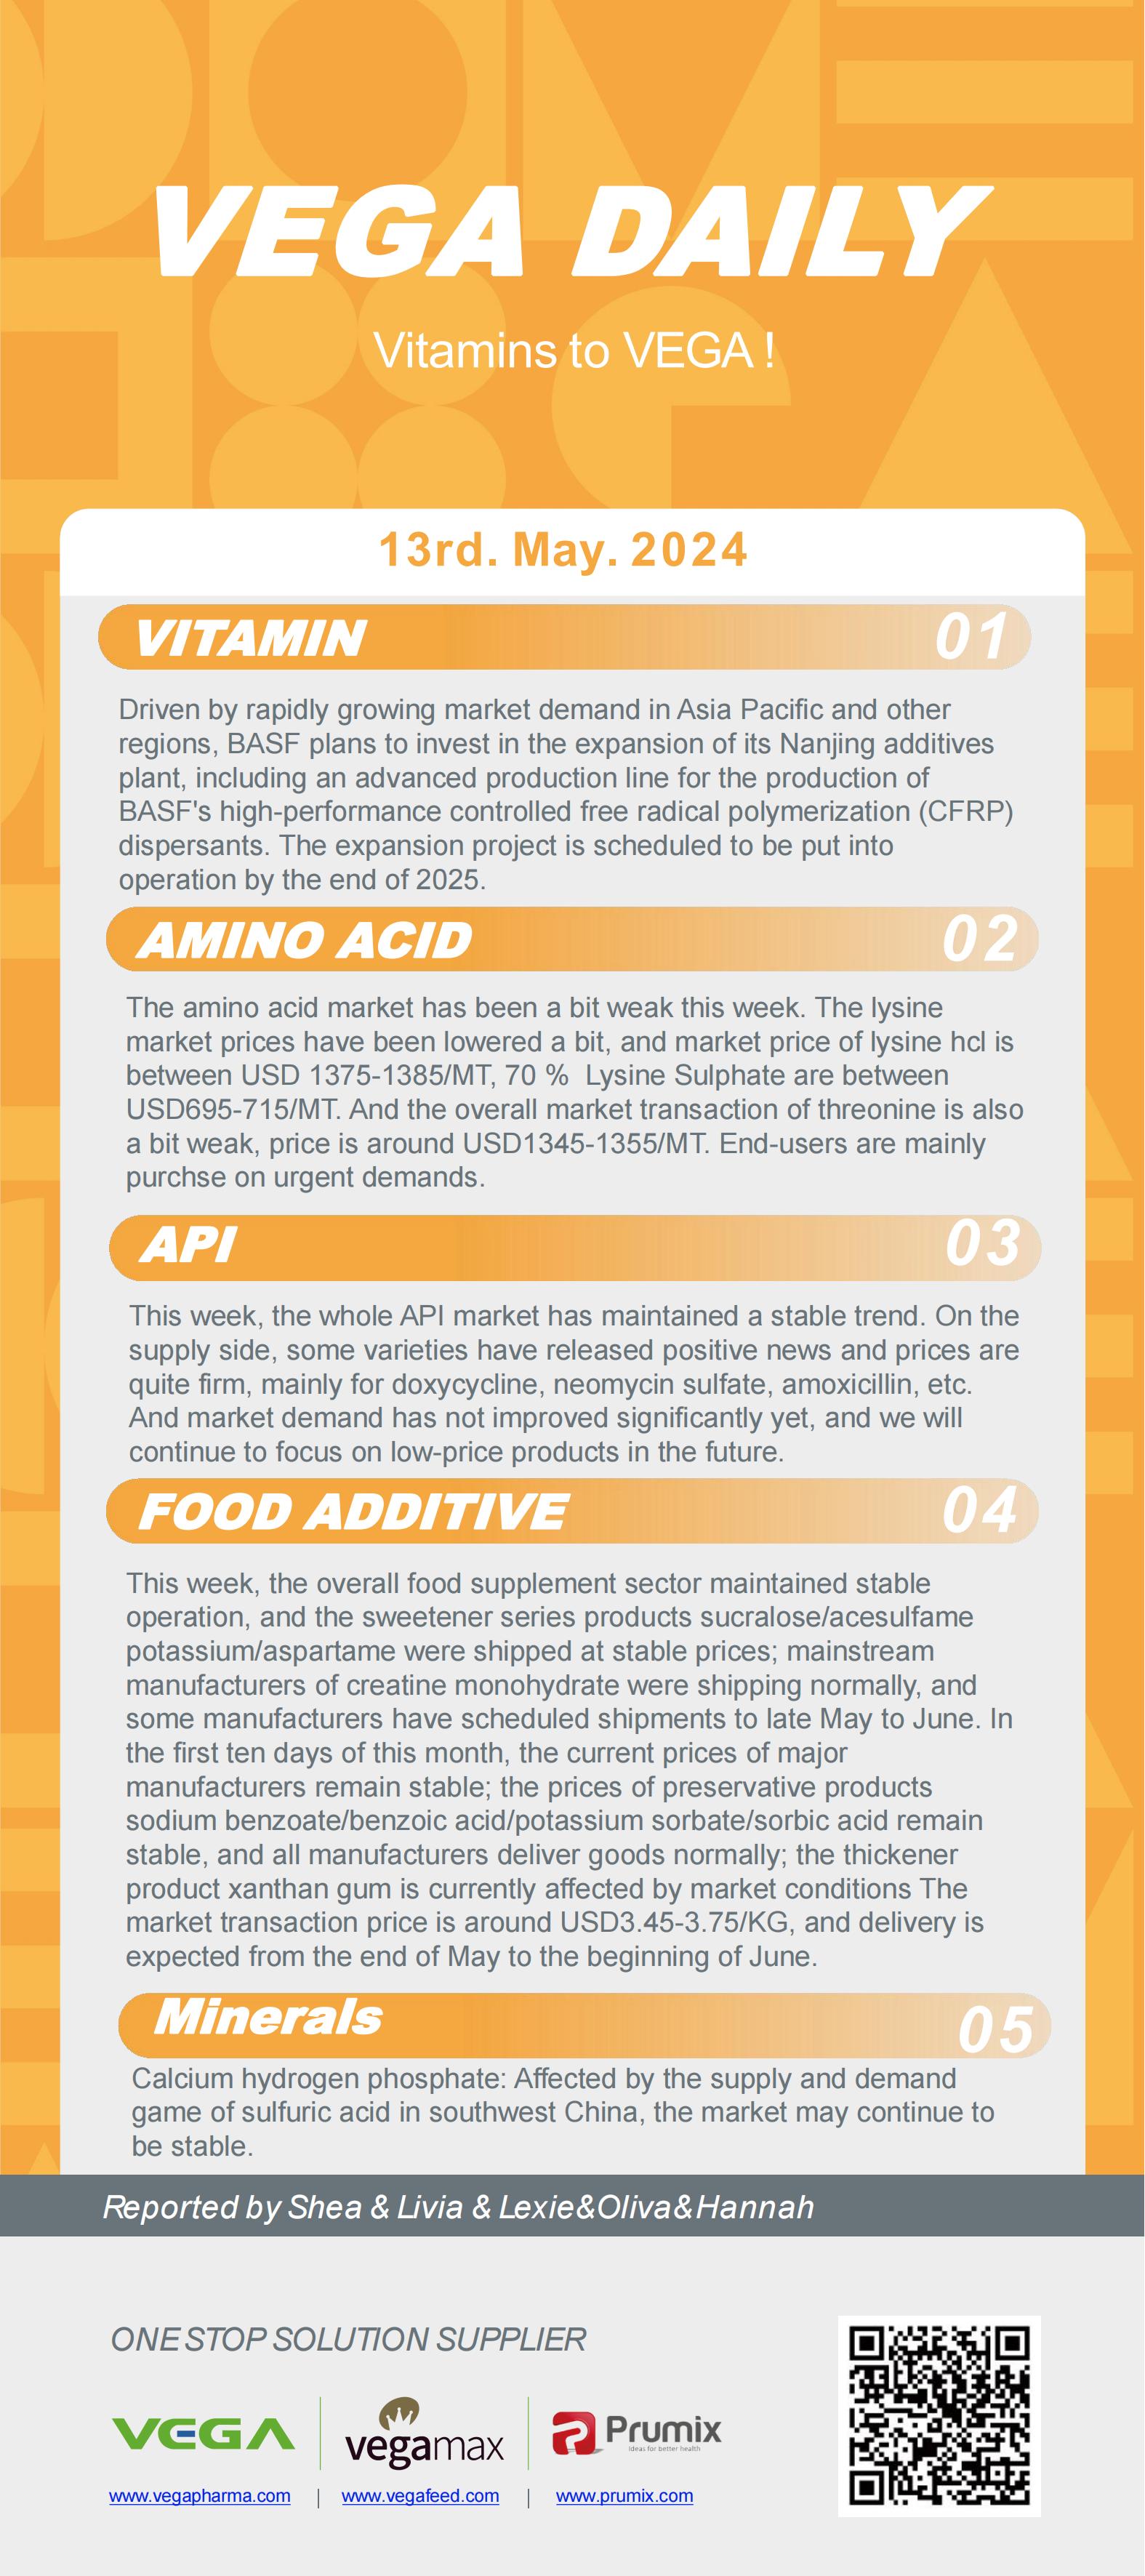 Vega Daily Dated on May 13th 2024 Vitamin Amino Acid APl Food Additives.jpg